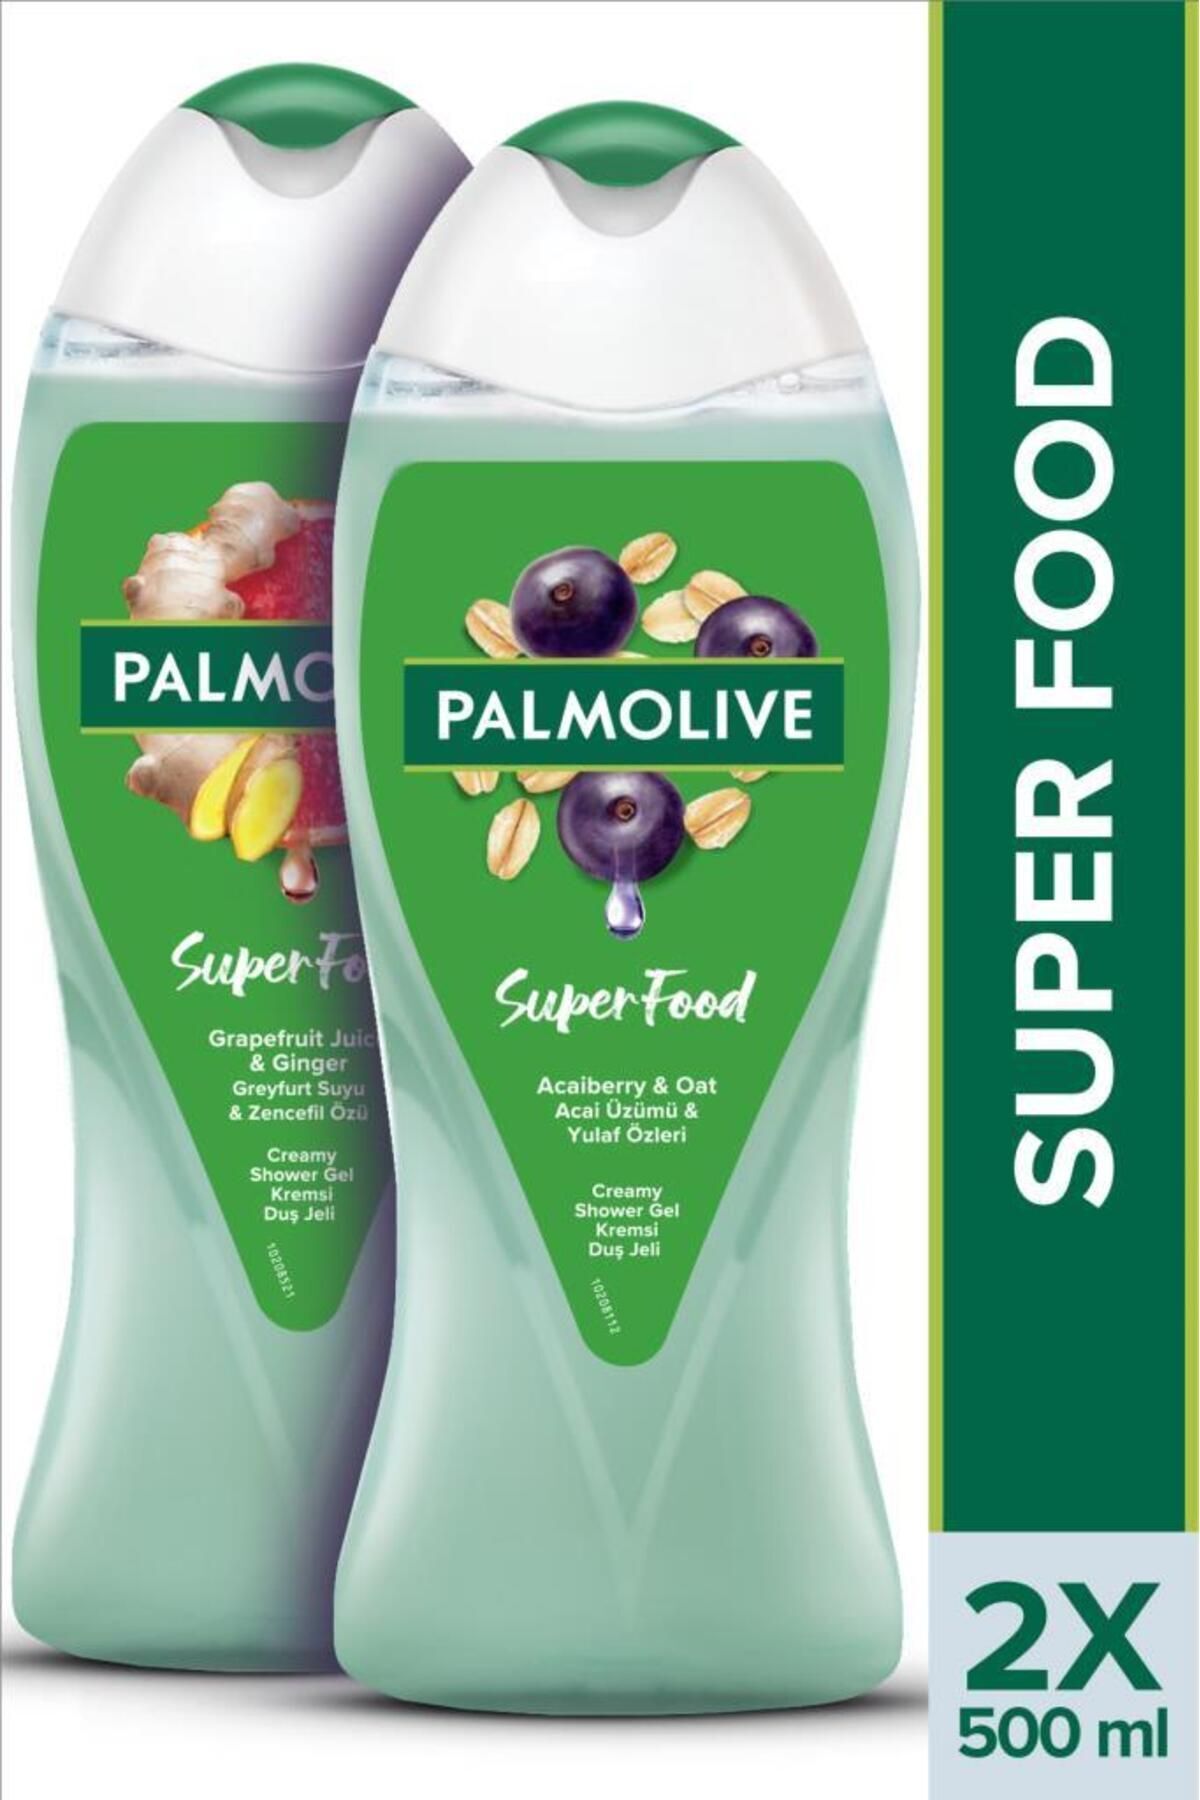 Palmolive Super Food Greyfurt Suyu & Zencefil Özü ve Super Food Acai Üzümü & Yulaf Özleri 500 ml